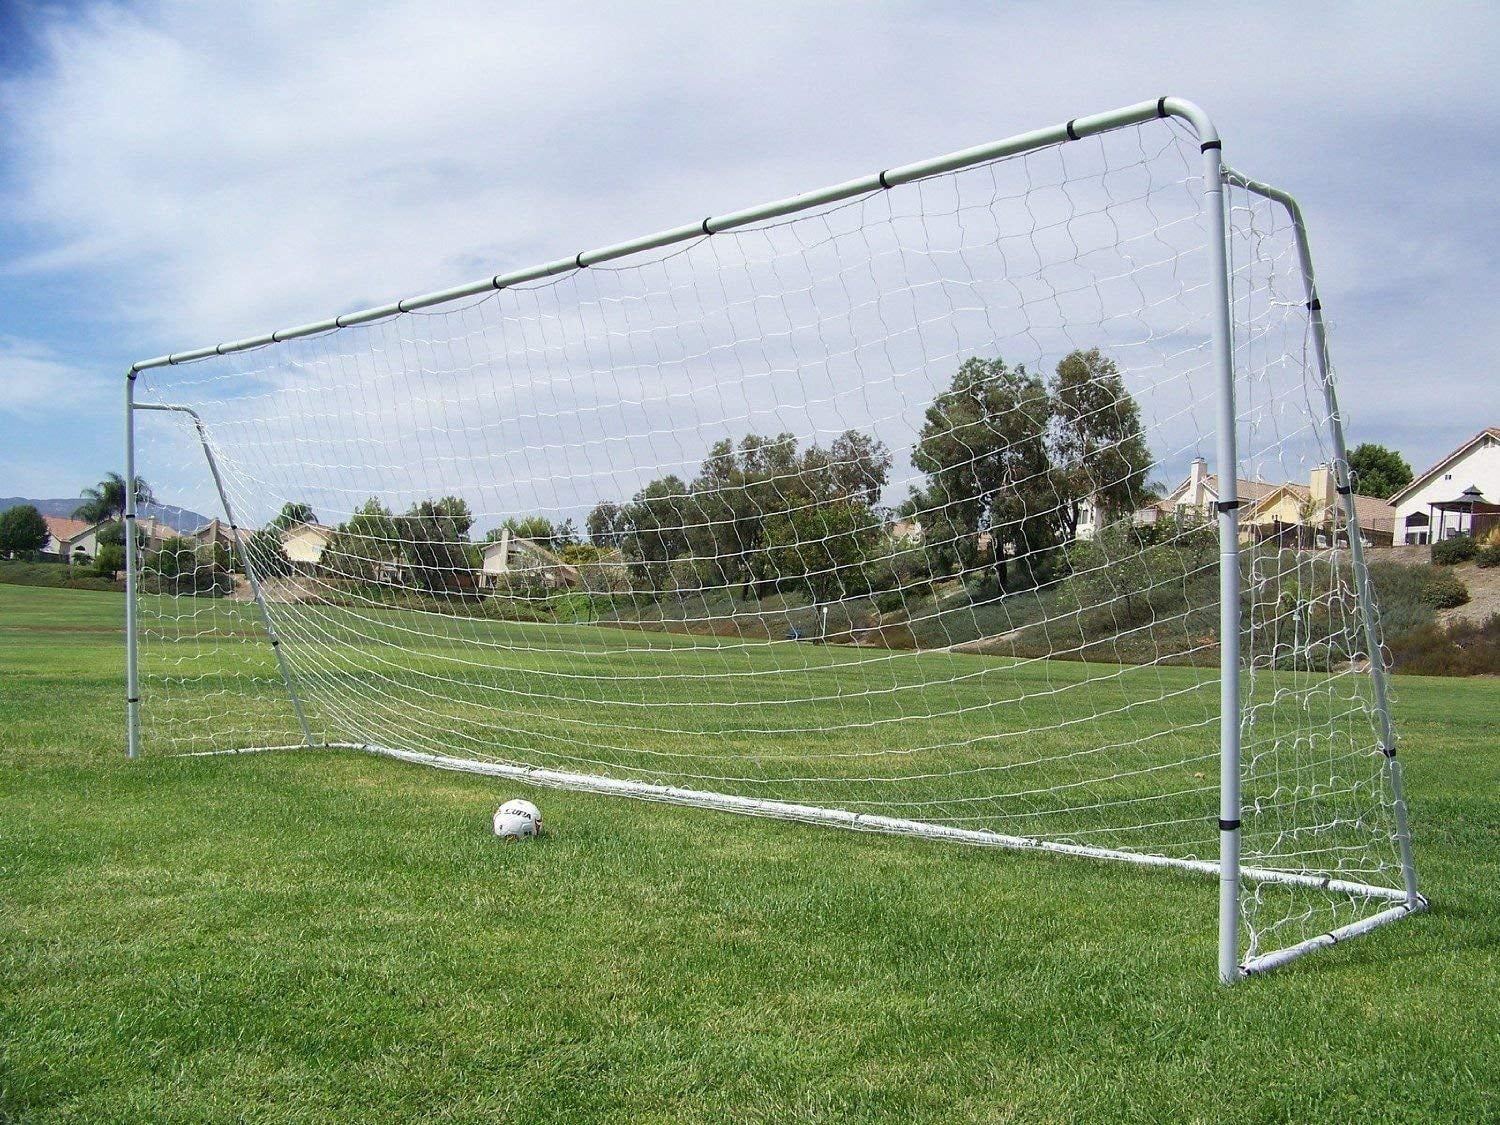 Details about   Kids Boy Soccer Goal W/Ball Kids Portable Net Backyard In/Outdoor Play Sports US 